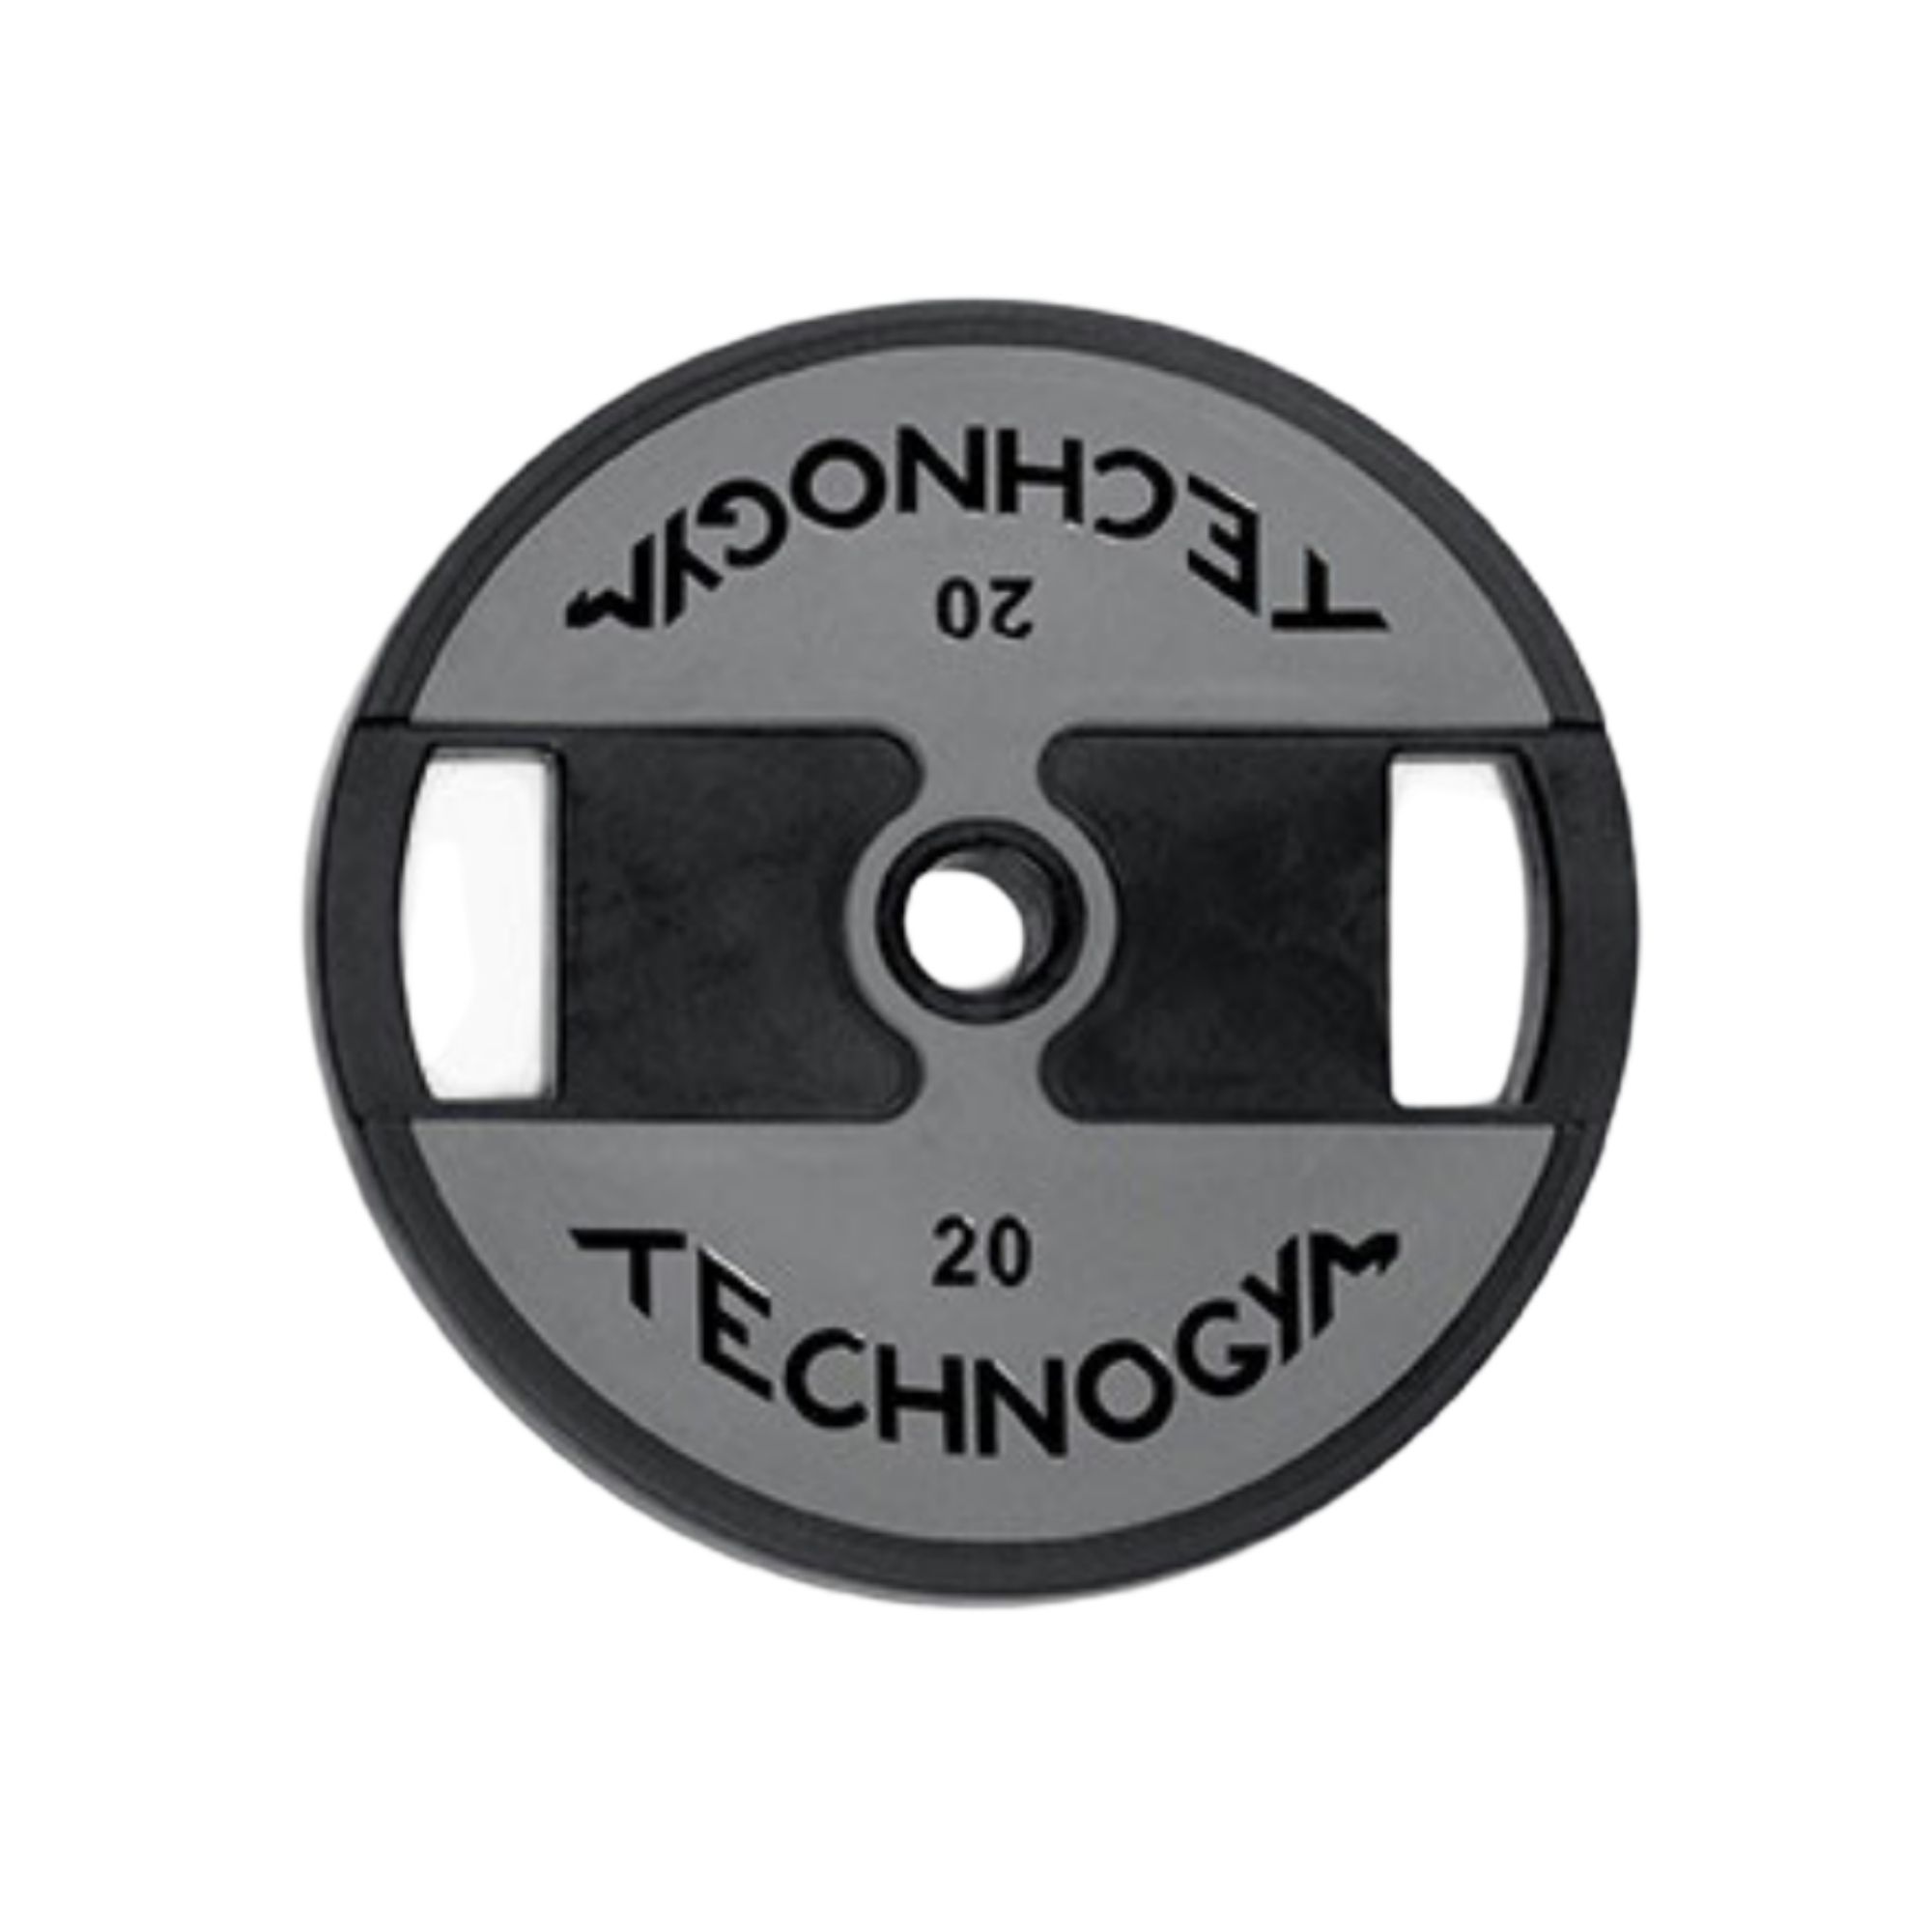 Set disques uréthane musculation 137,5 kg – TECHNOGYM – Agence